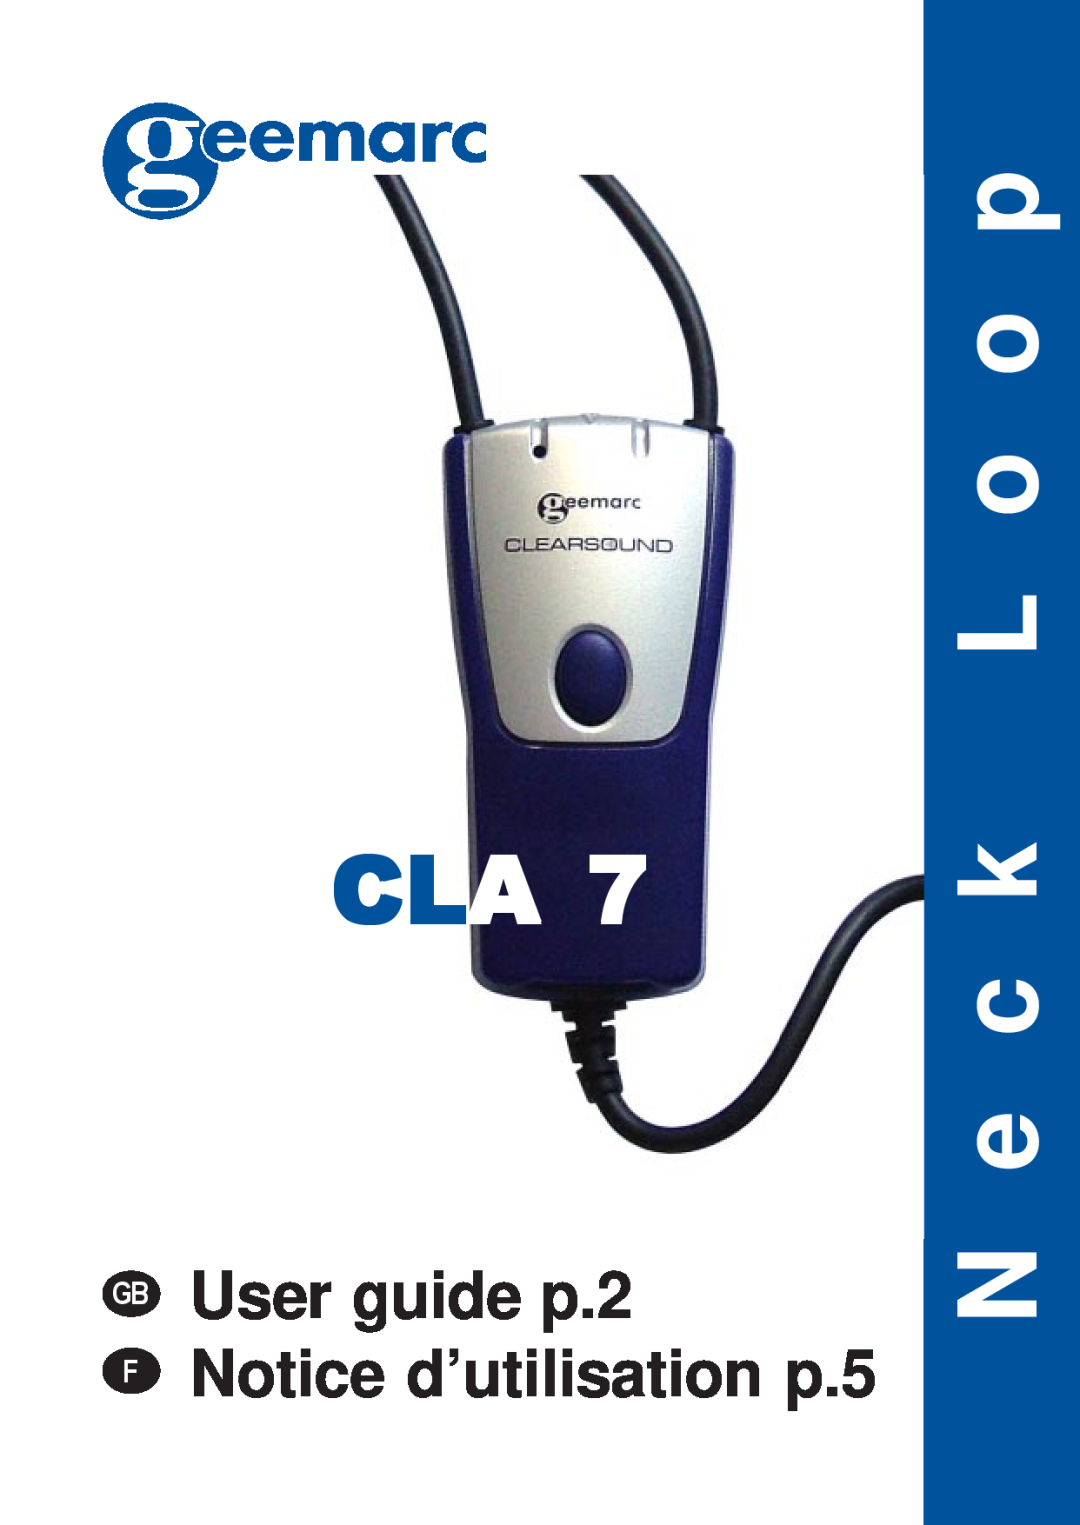 Geemarc CLA 7 manual L o o p N e c k, GB User guide p.2 F Notice d’utilisation p.5 